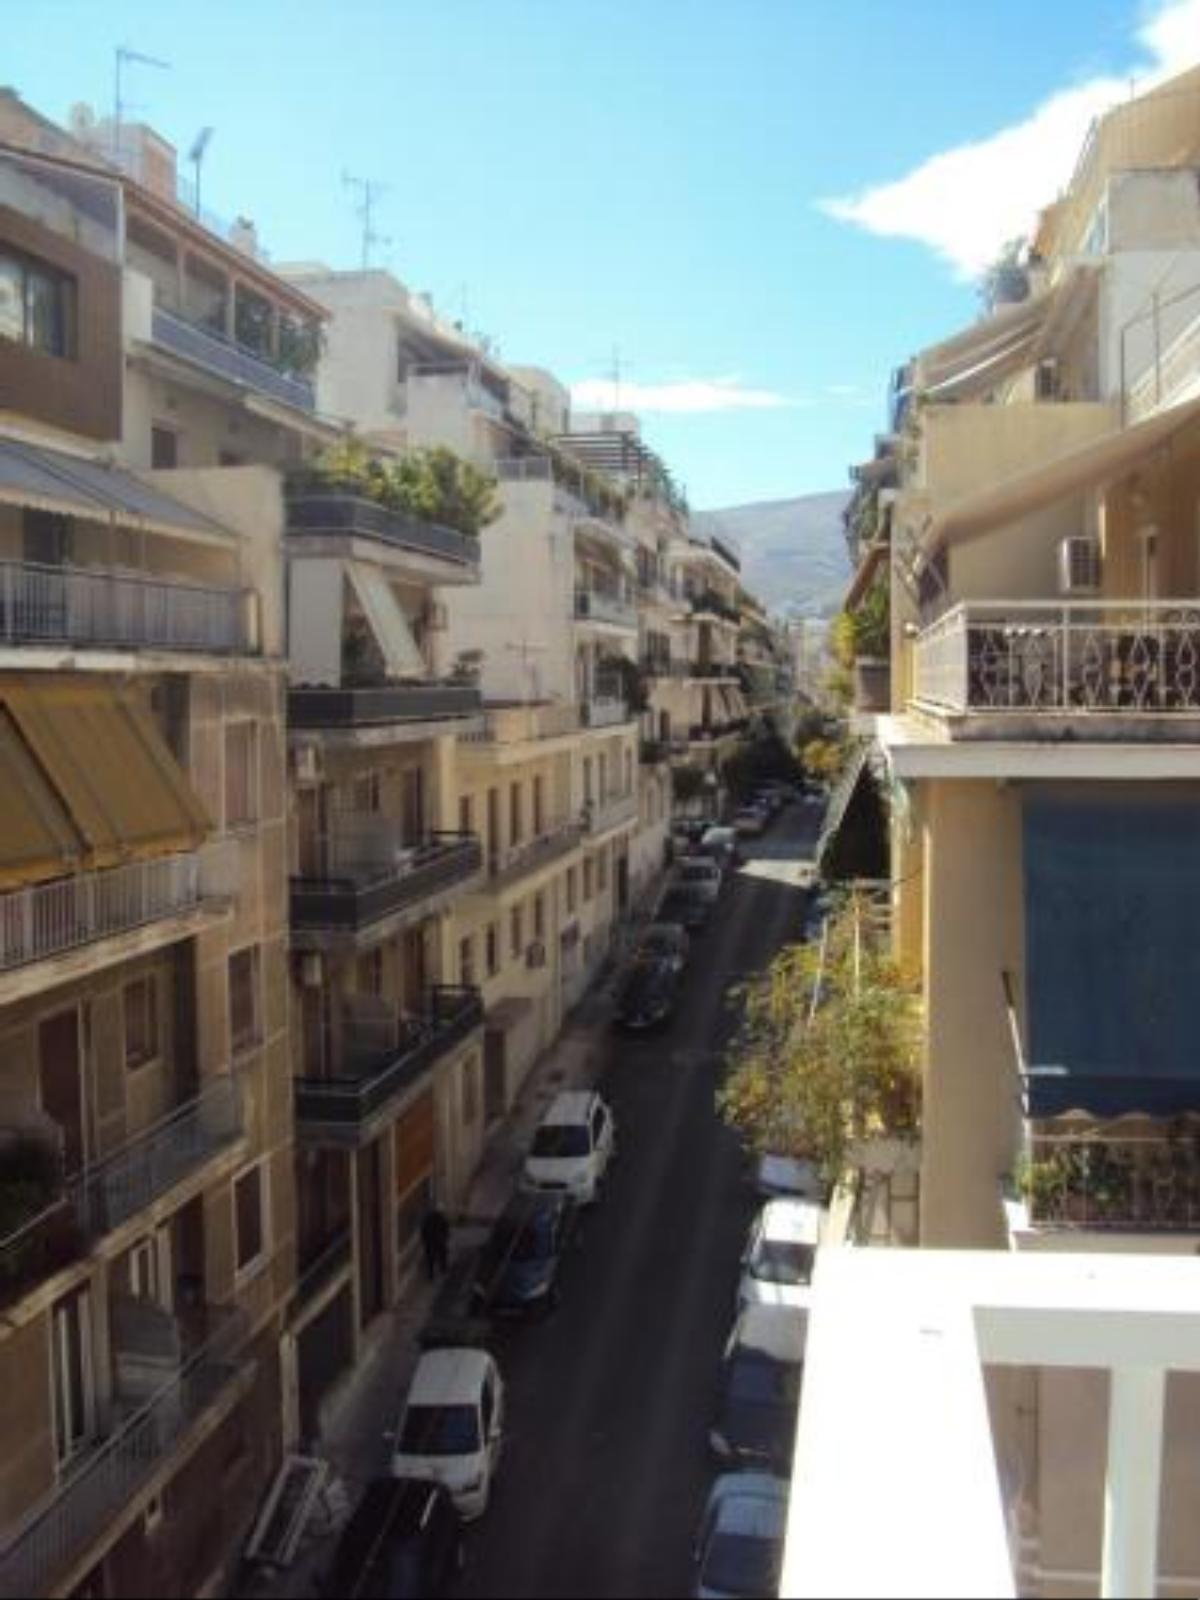 Penthouse-Caravel hotel and Hilton hotel area Hotel Athens Greece